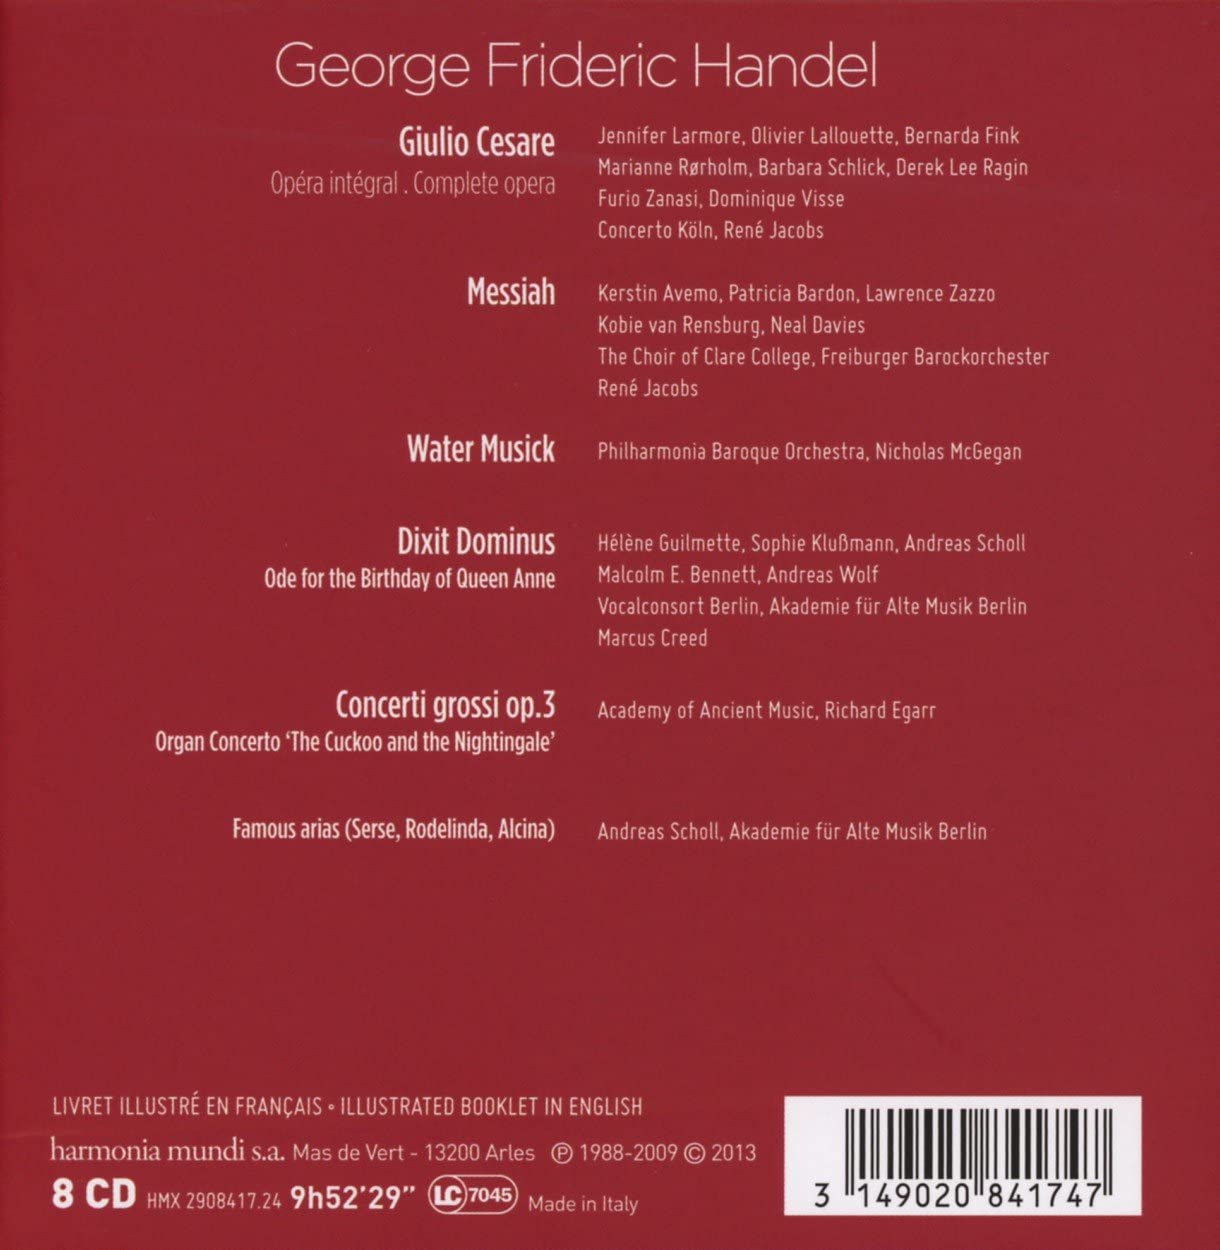 George Frideric Handel - Portrait - slide-1